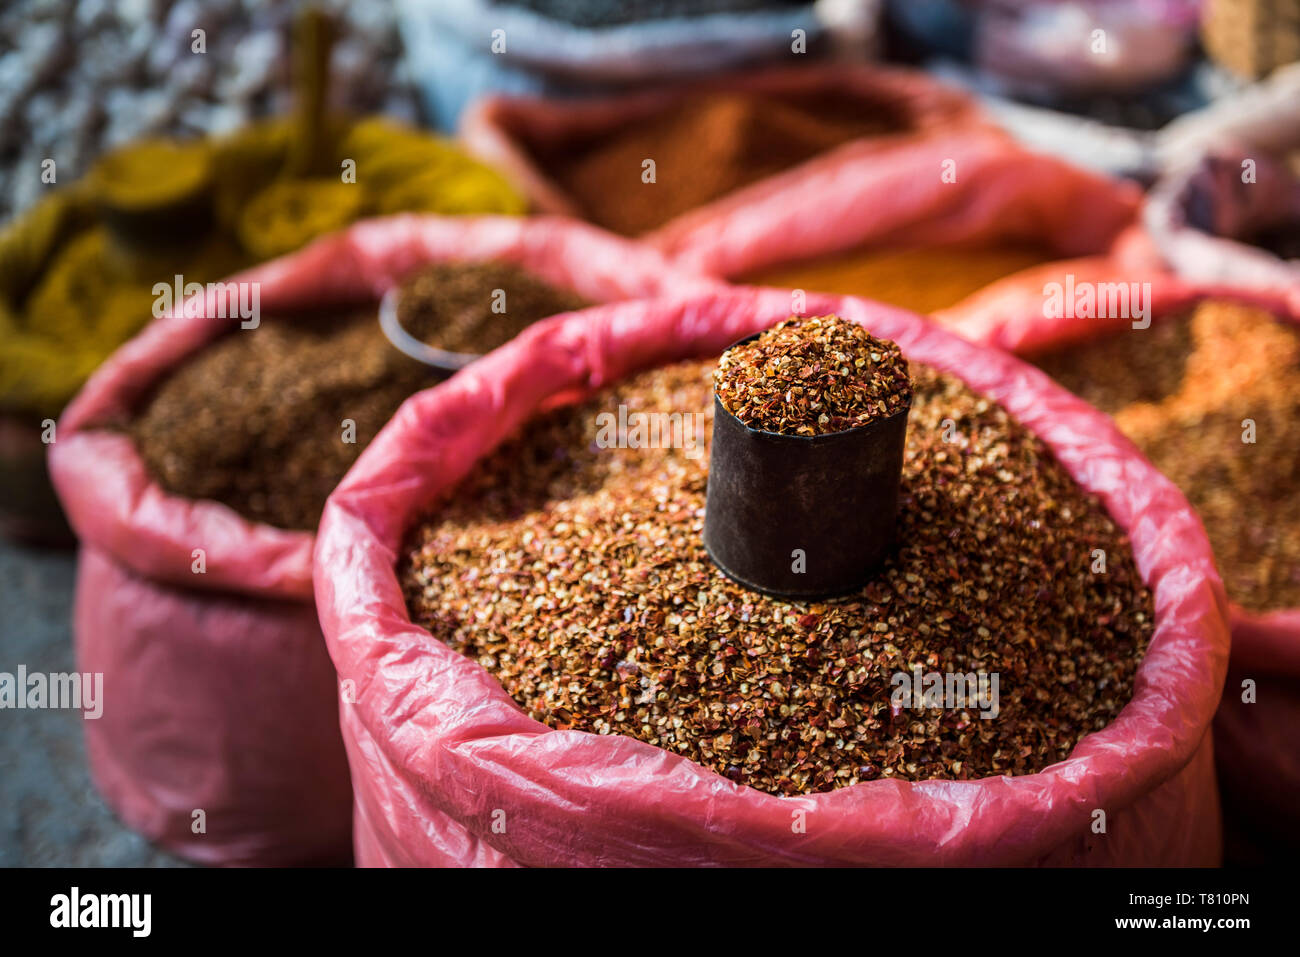 Mercato di frutta e verdura in Pindaya, Stato Shan, Myanmar (Birmania), Asia Foto Stock